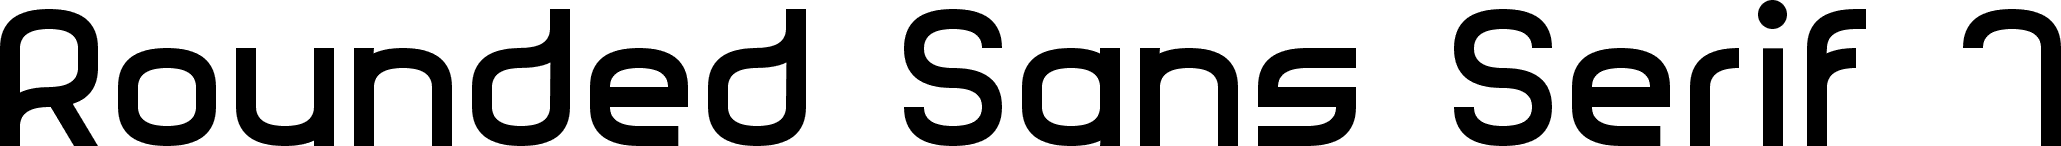 sans serif typeface with round o